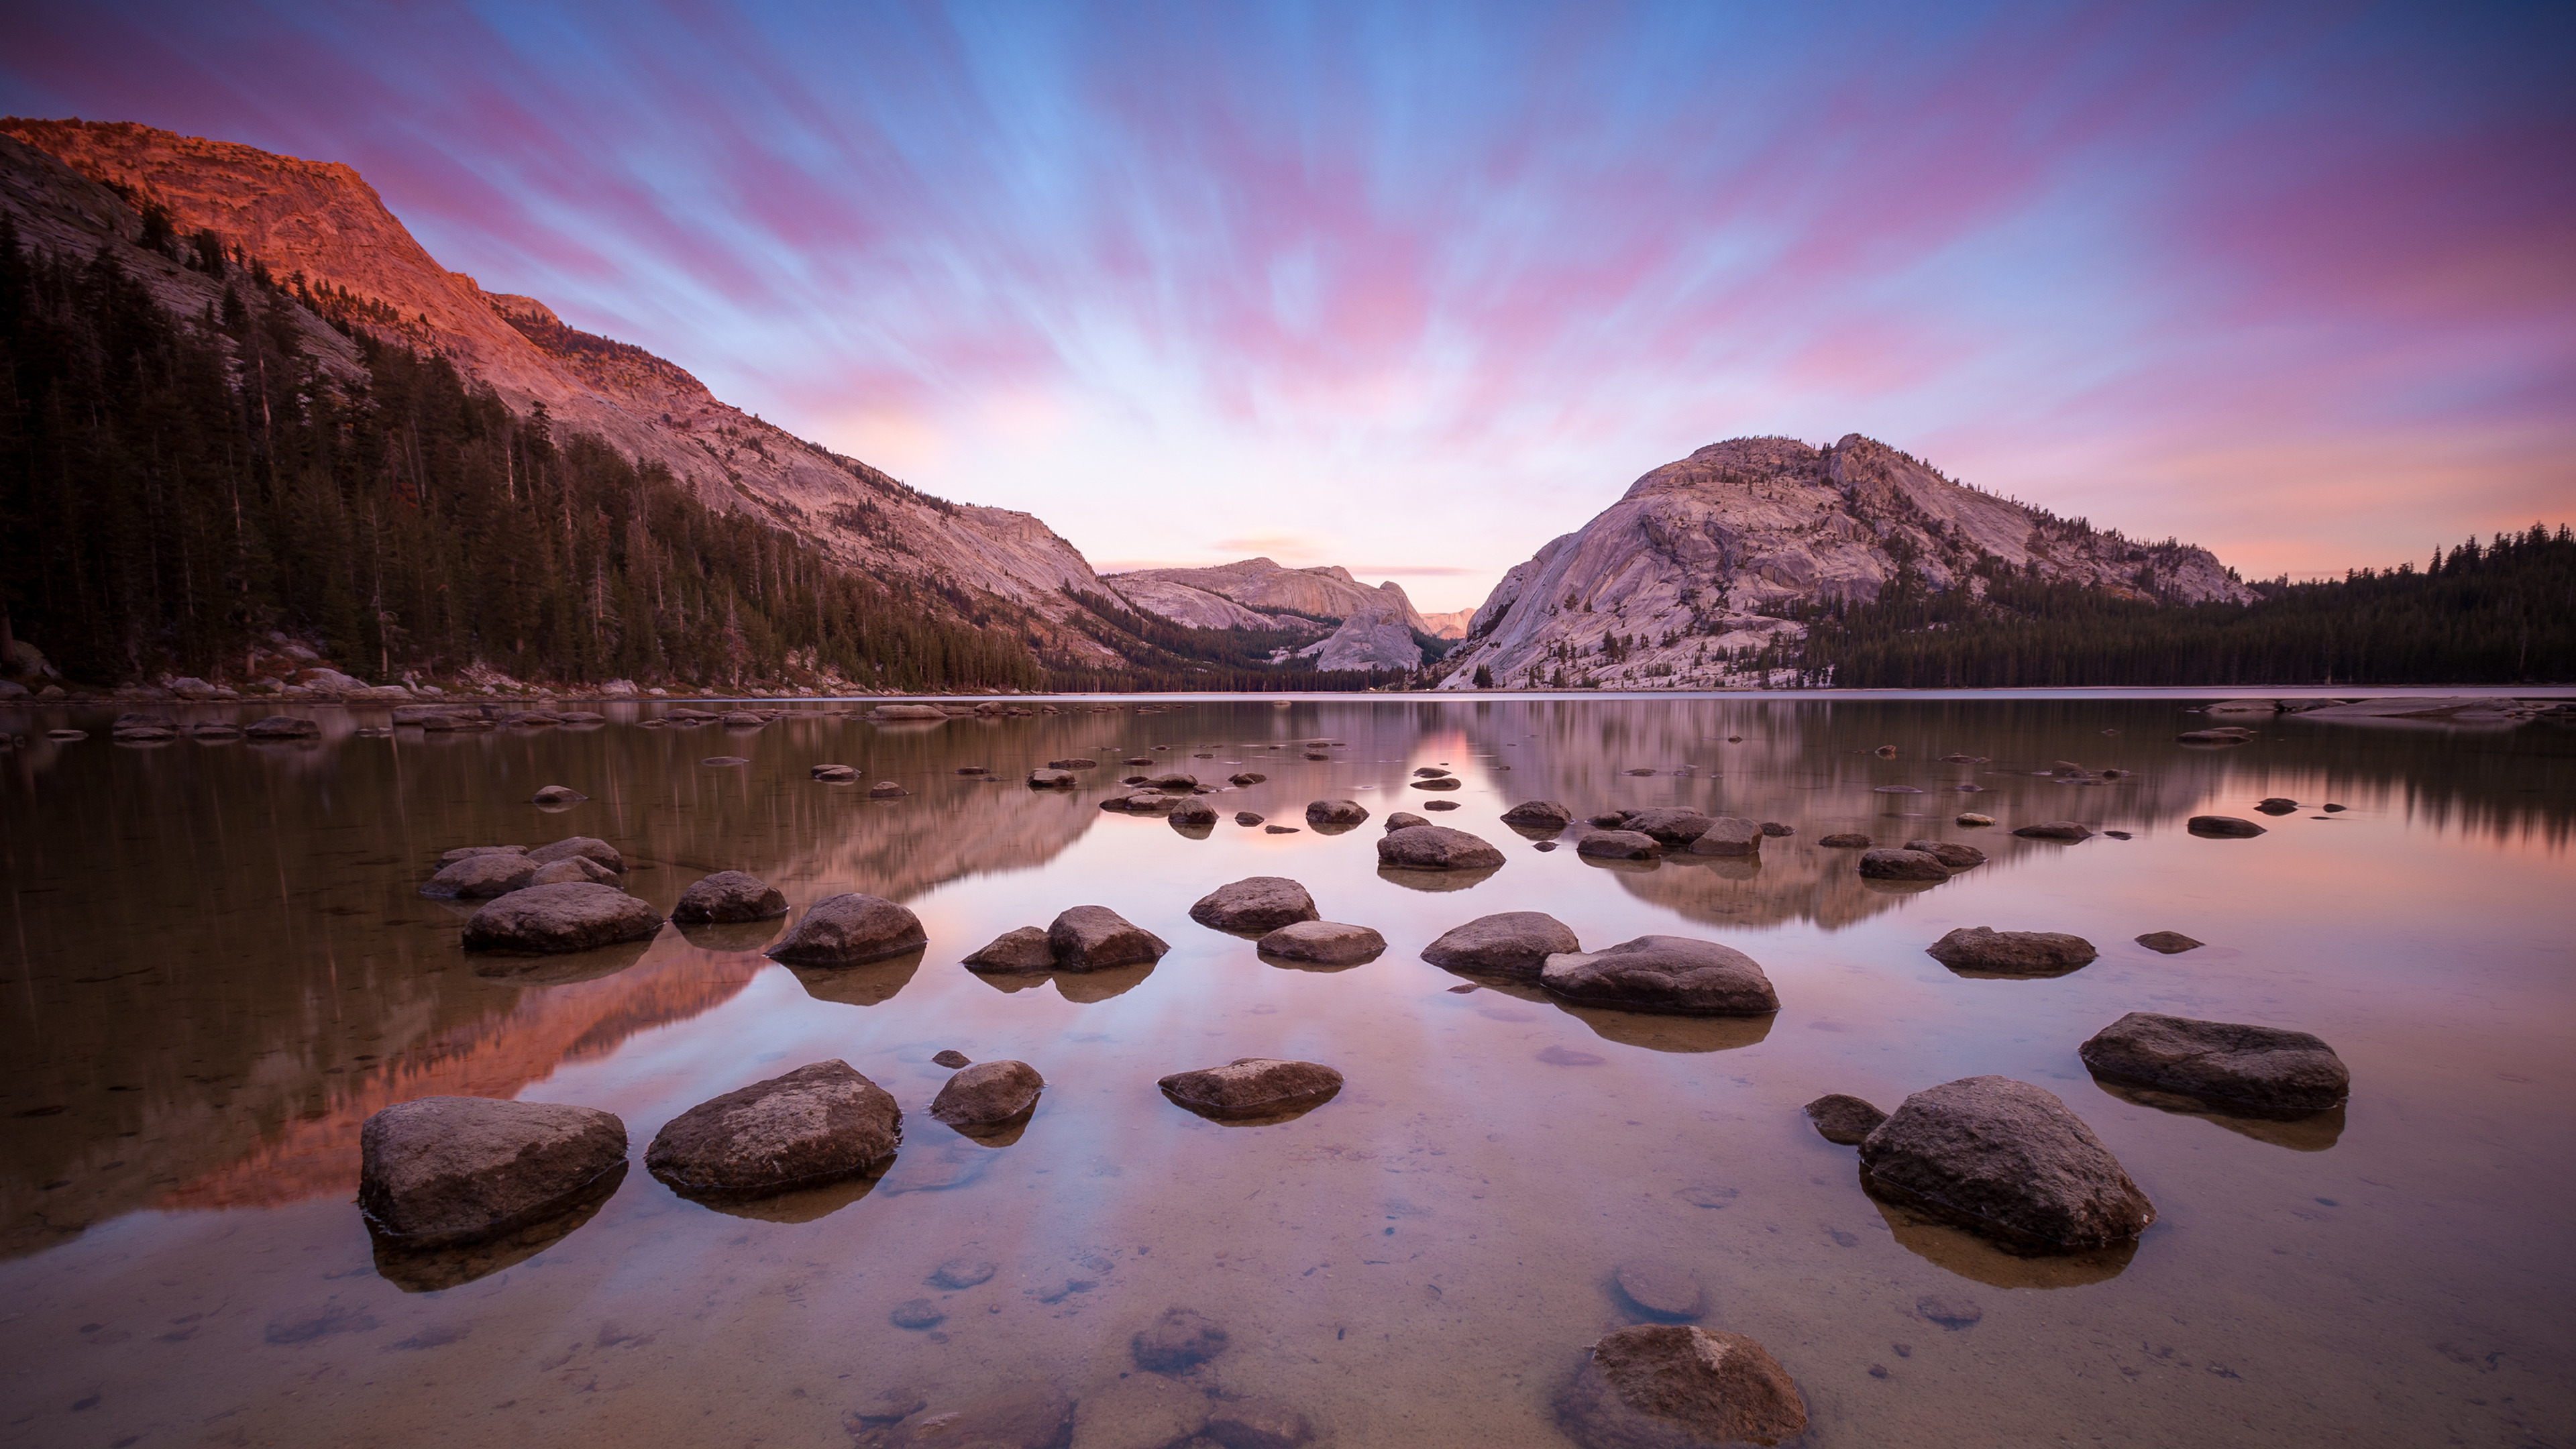 Yosemite National Park, USA, Yosemite Valley, California, Landscape, River, Water, Mountains, OS X, Reflection, Apple Inc. Wallpaper